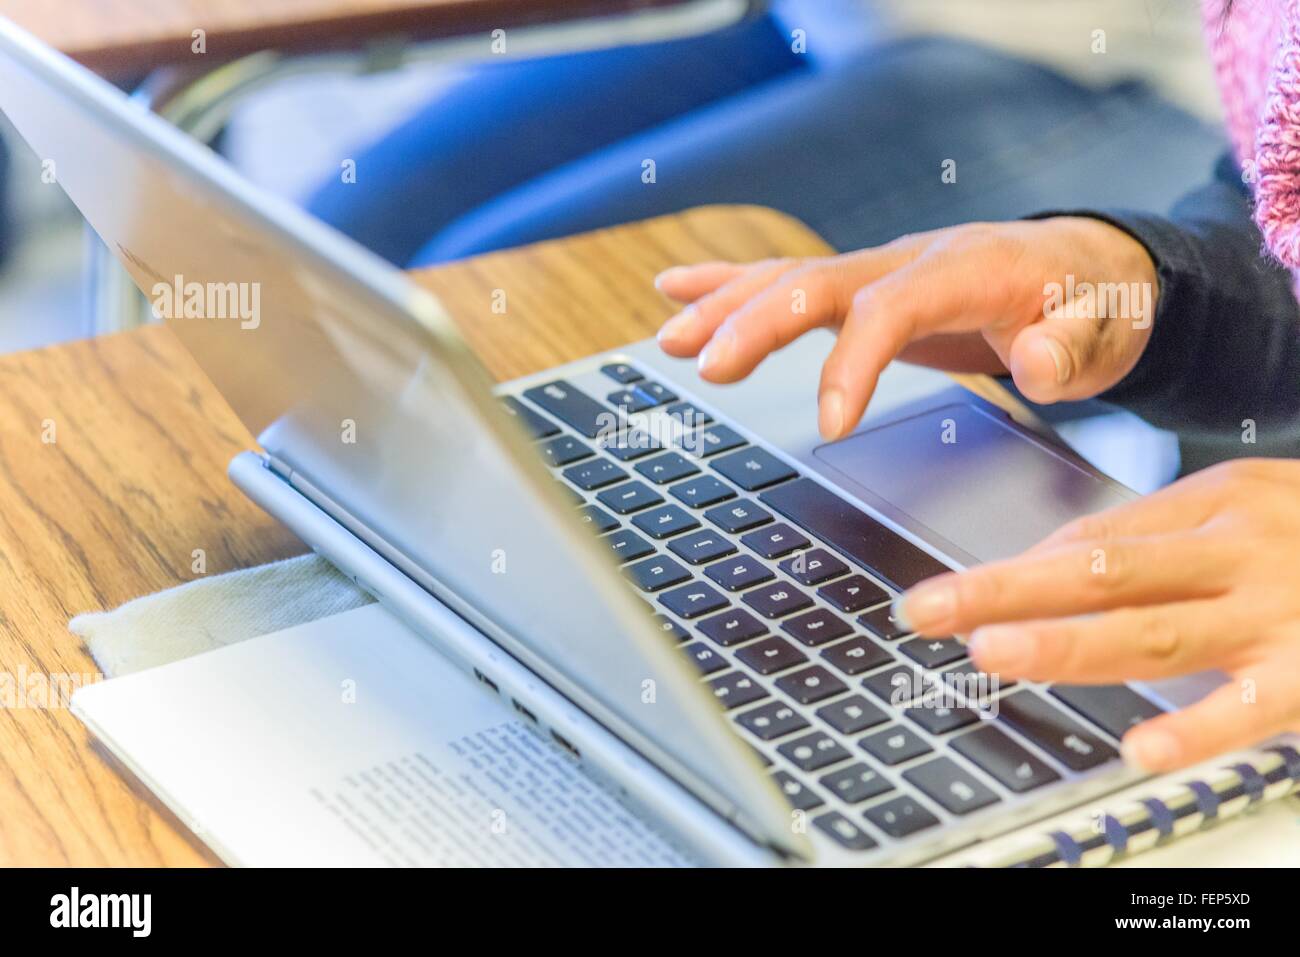 Mains de femme mature student typing on laptop in class Banque D'Images